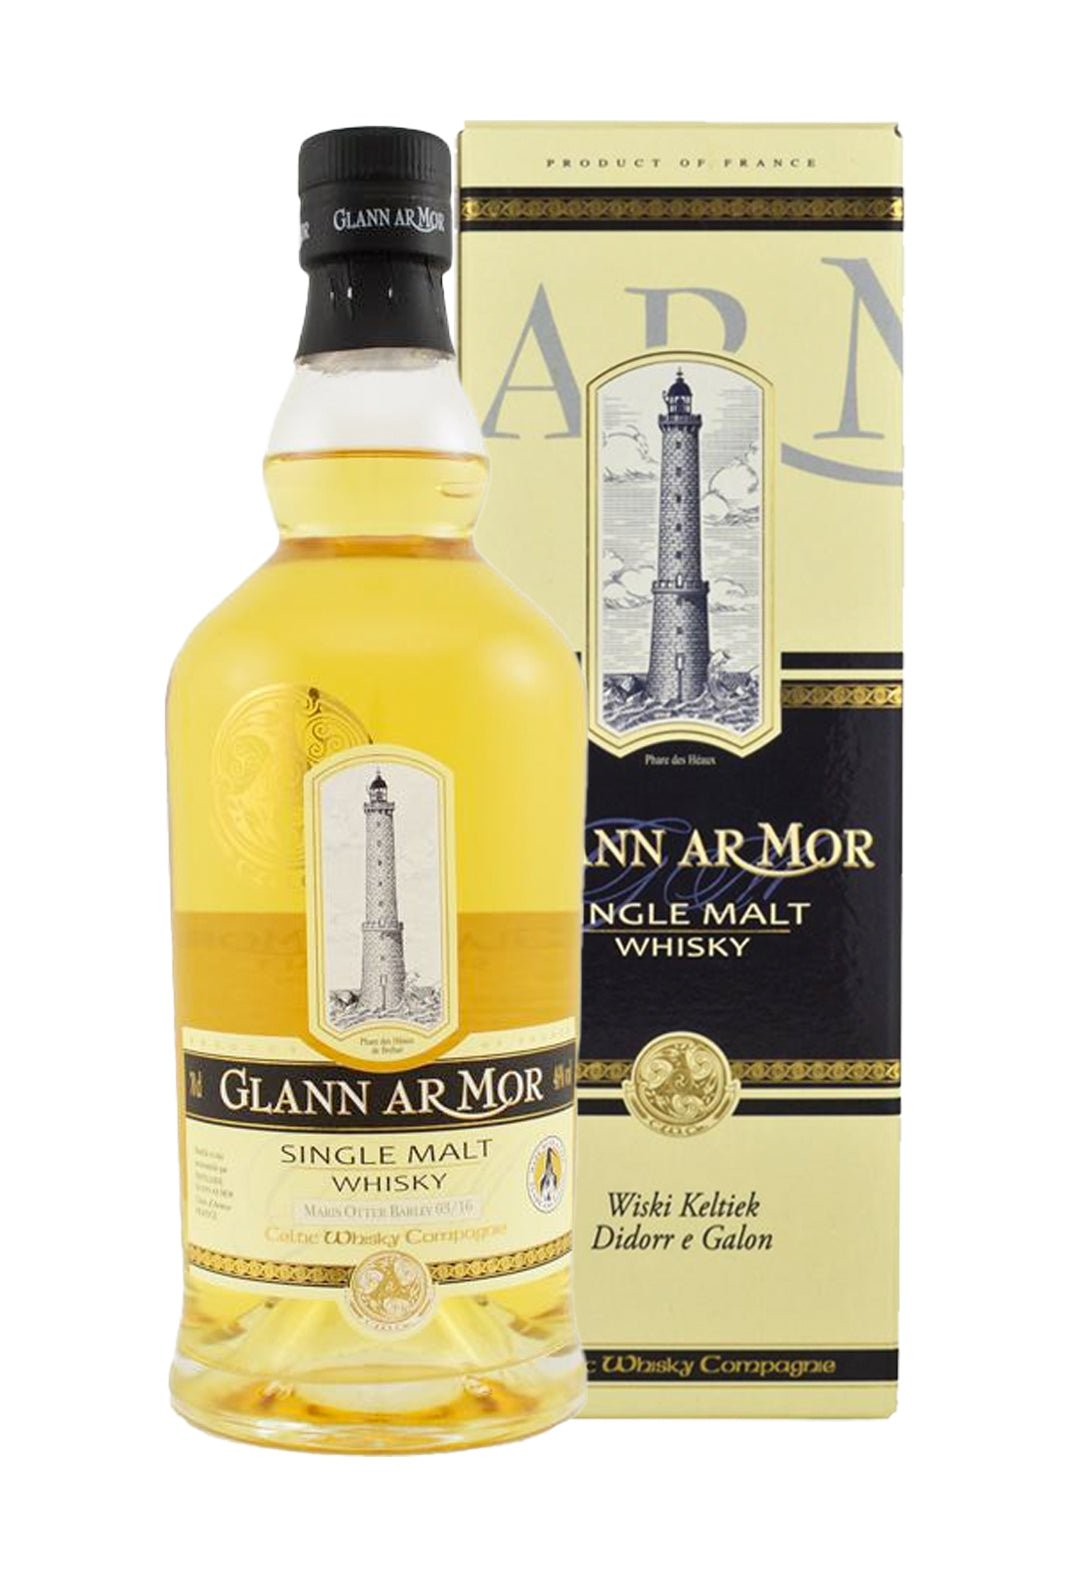 Glann ar Mor Whisky Maris 2016 46% 700ml | Whiskey | Shop online at Spirits of France